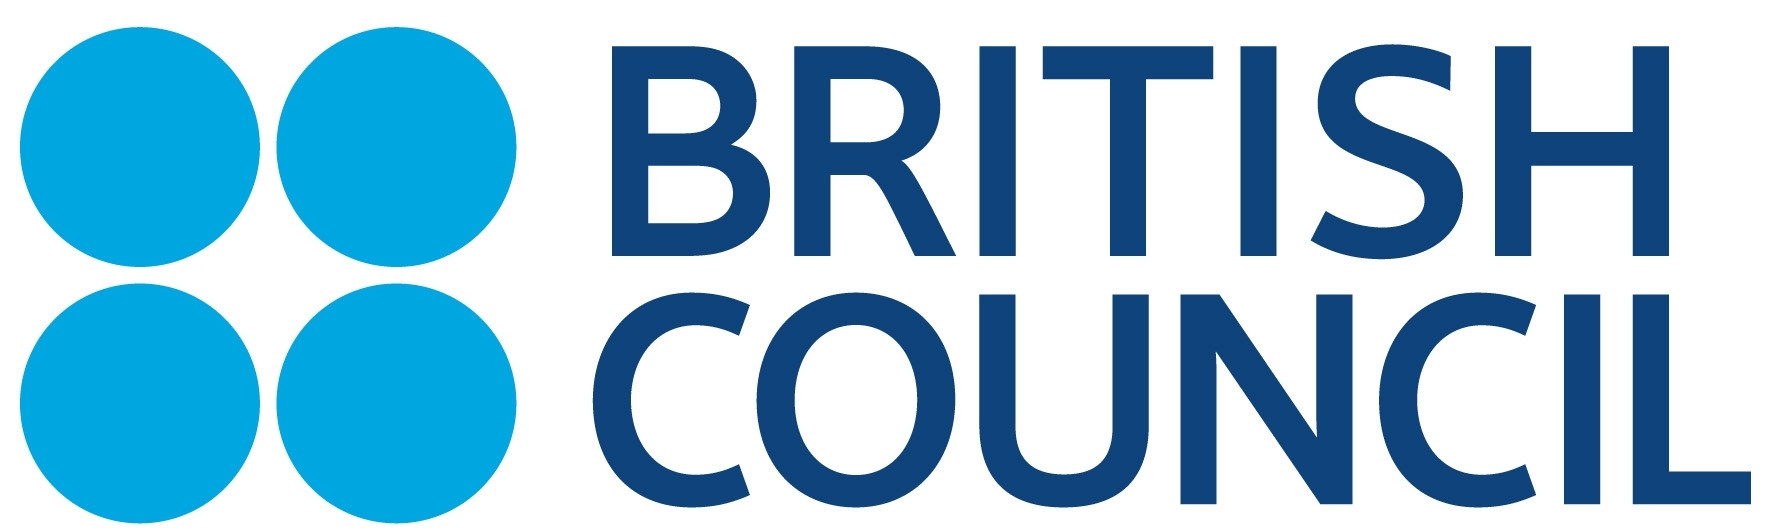 british-council-logo.jpg